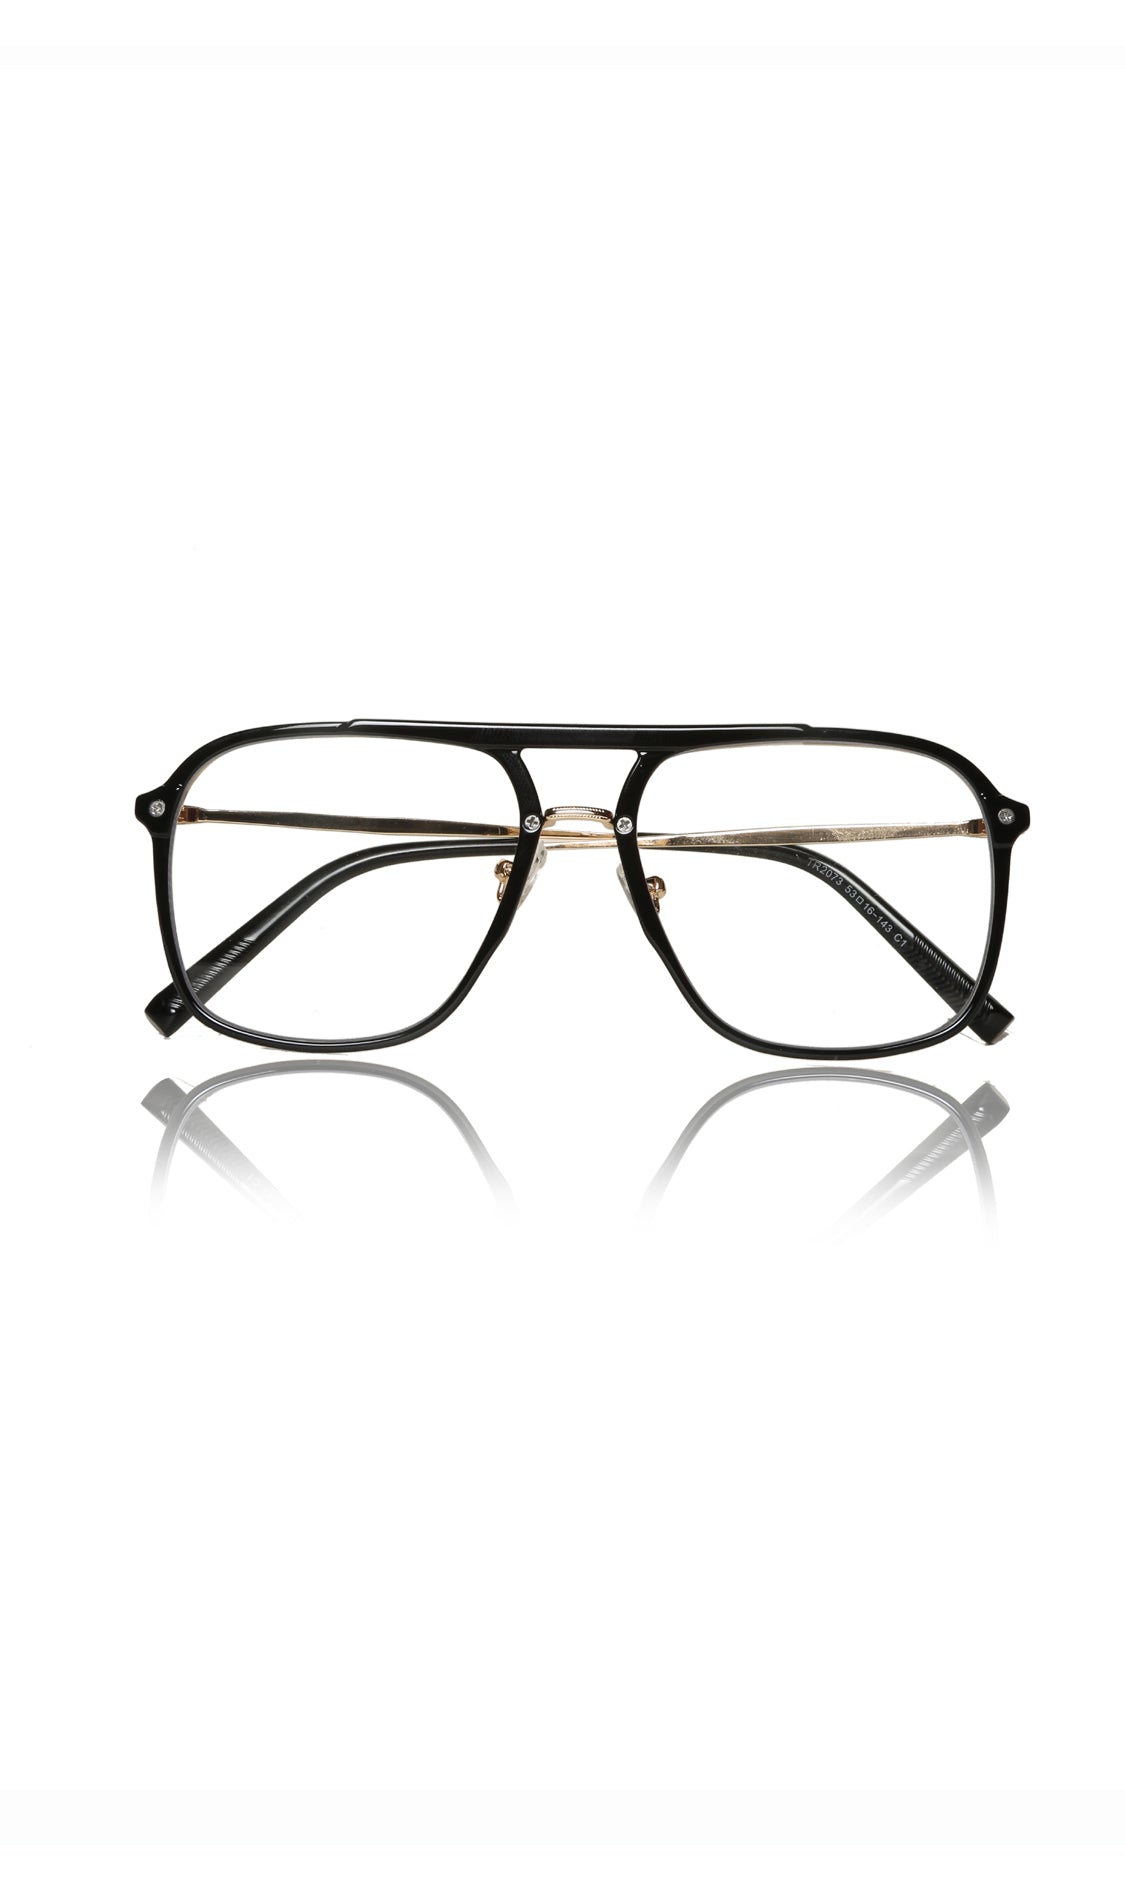 Jodykoes® Premium Series Double Bar Eyewear Eyeglasses Spectacles Frame for Men and Women (Black and Gold)